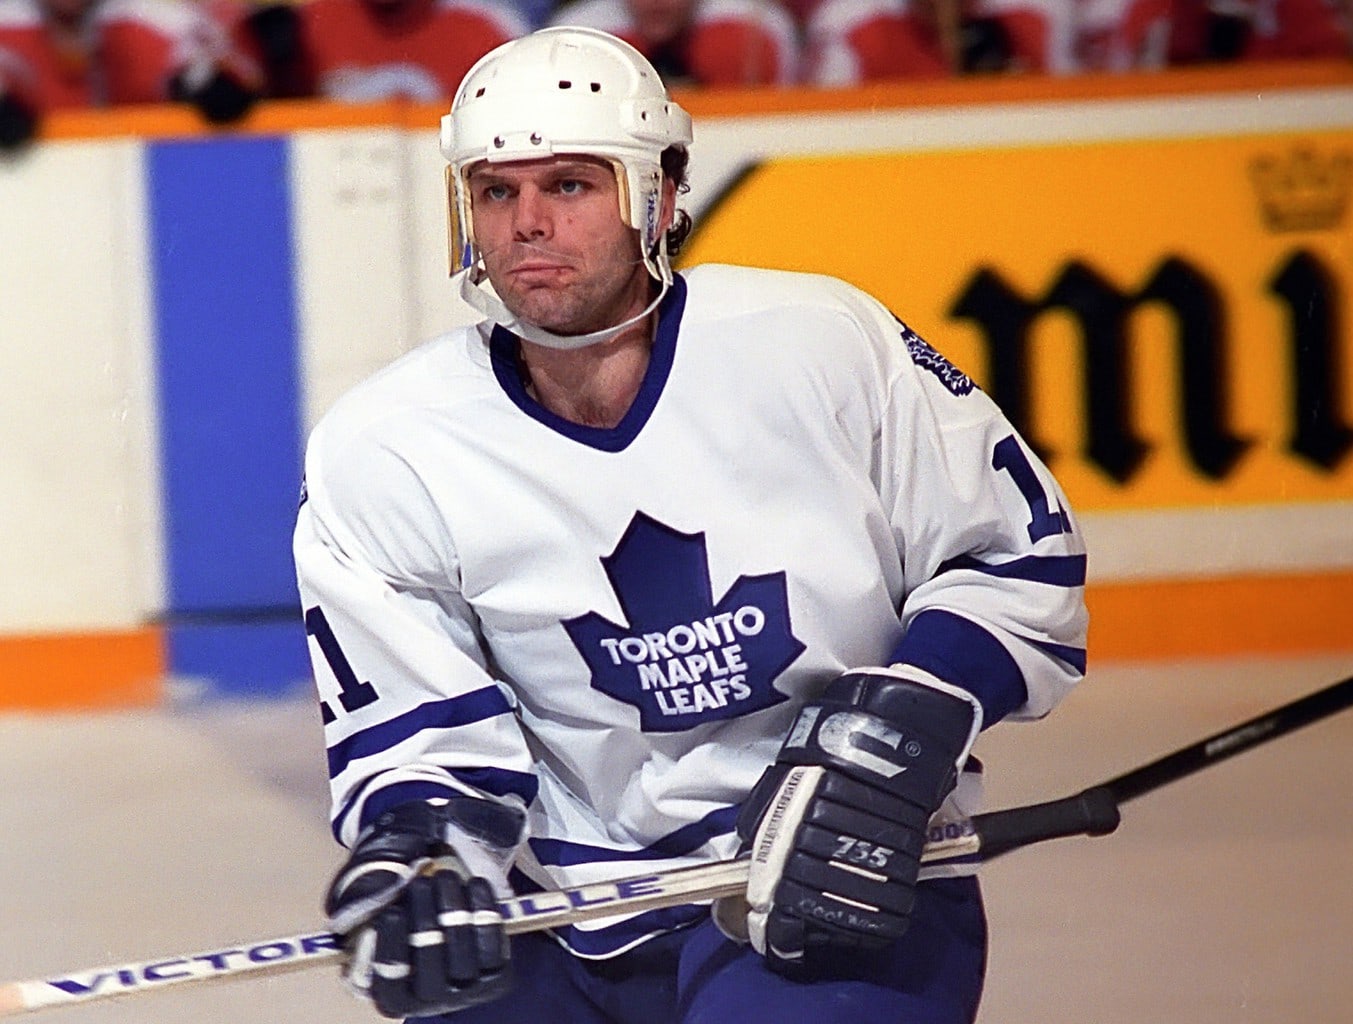 Mike-Gartner-Maple-Leafs-1.jpg